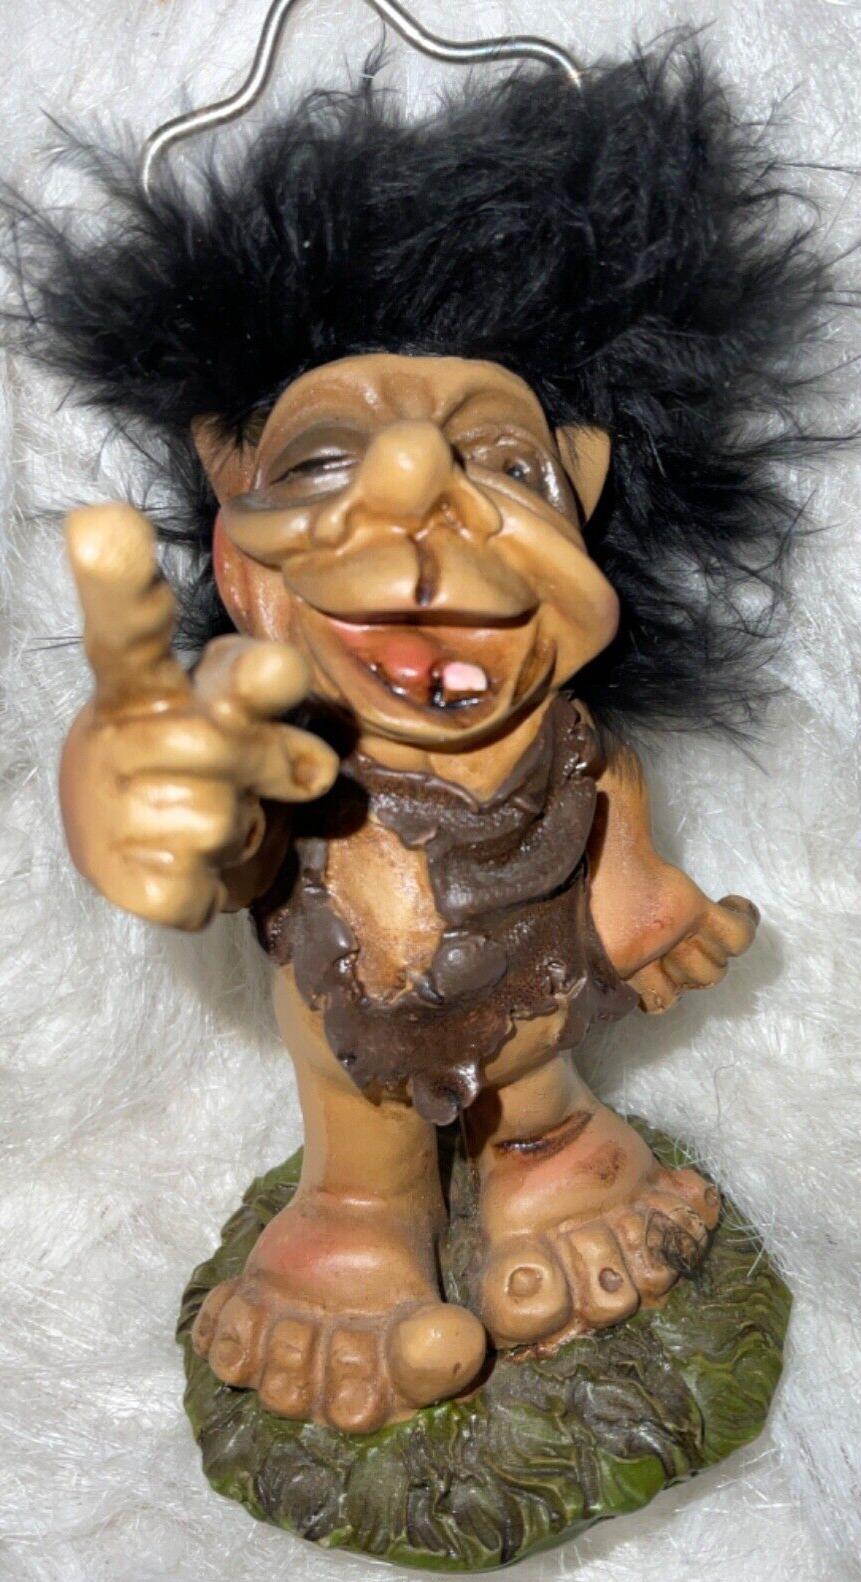 Collector Troll Doll Figurine Gnome Goblin NyForm? Place Card Holder 4” B3